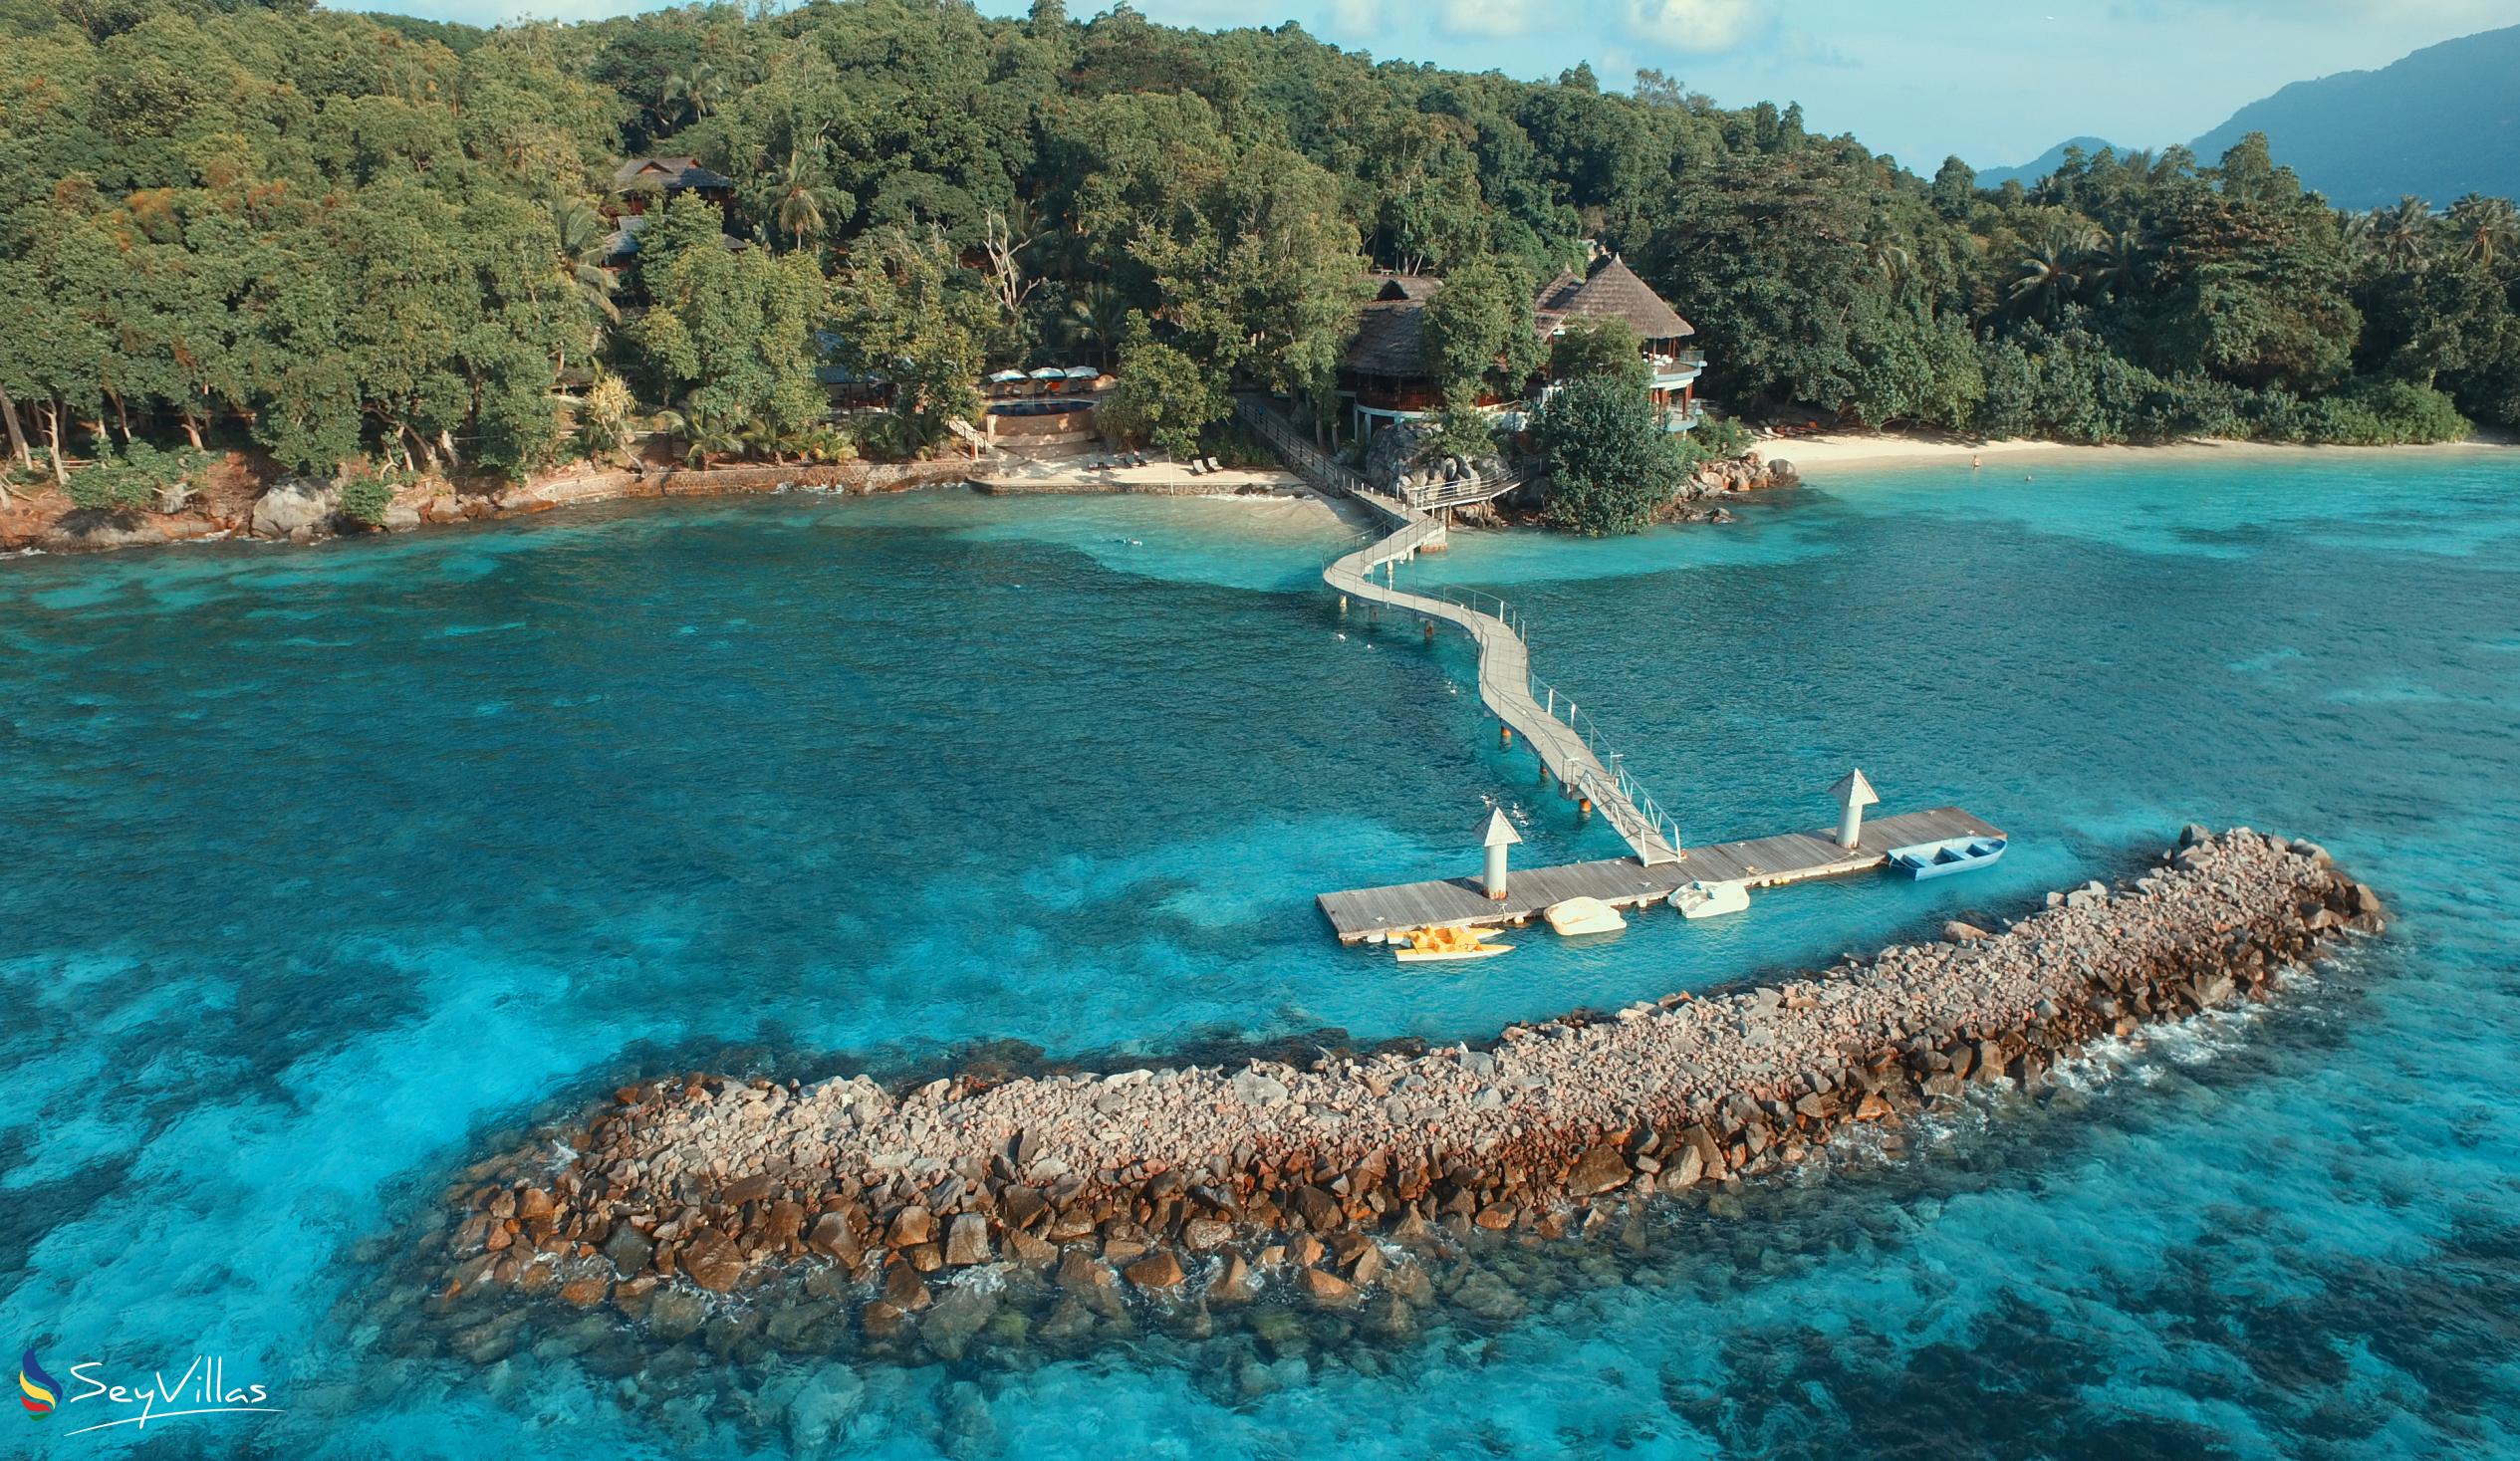 Photo 1: Cerf Island Resort - Outdoor area - Cerf Island (Seychelles)